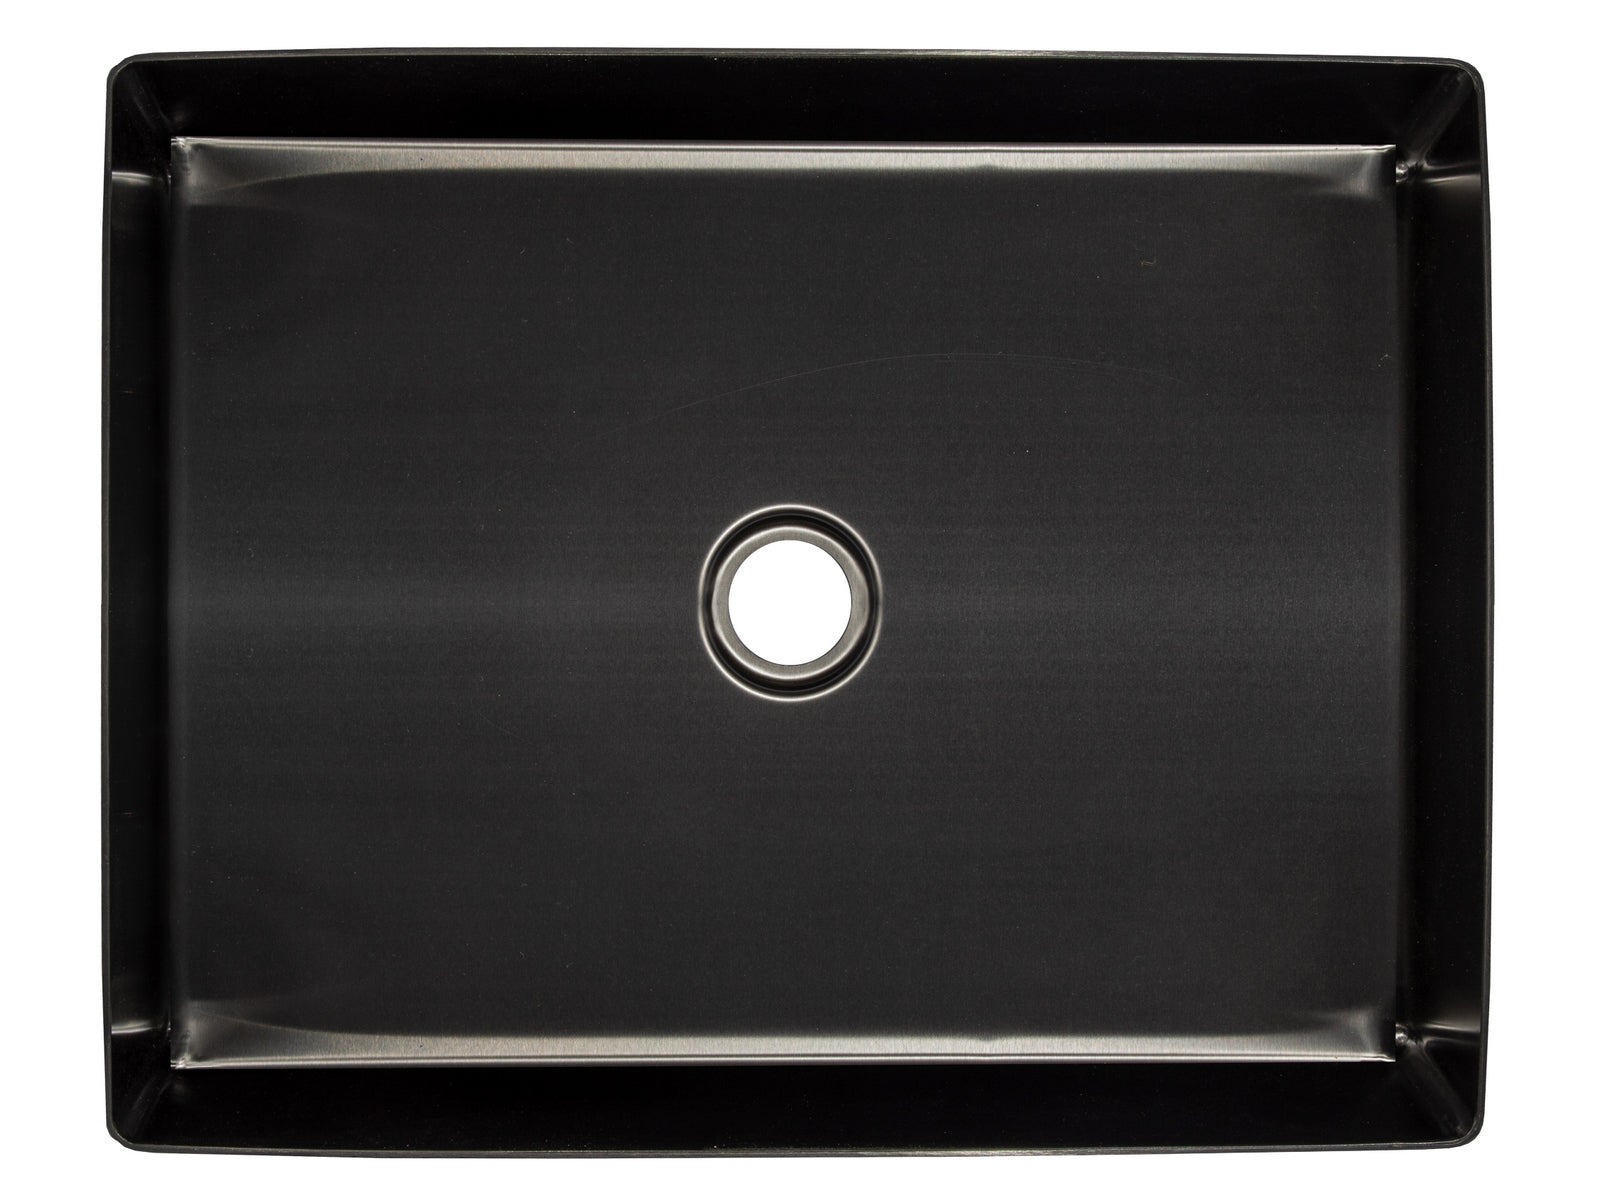 Rectangular 19 x 14 1/2" Stainless Steel Bathroom Vessel Sink with Drain in Black